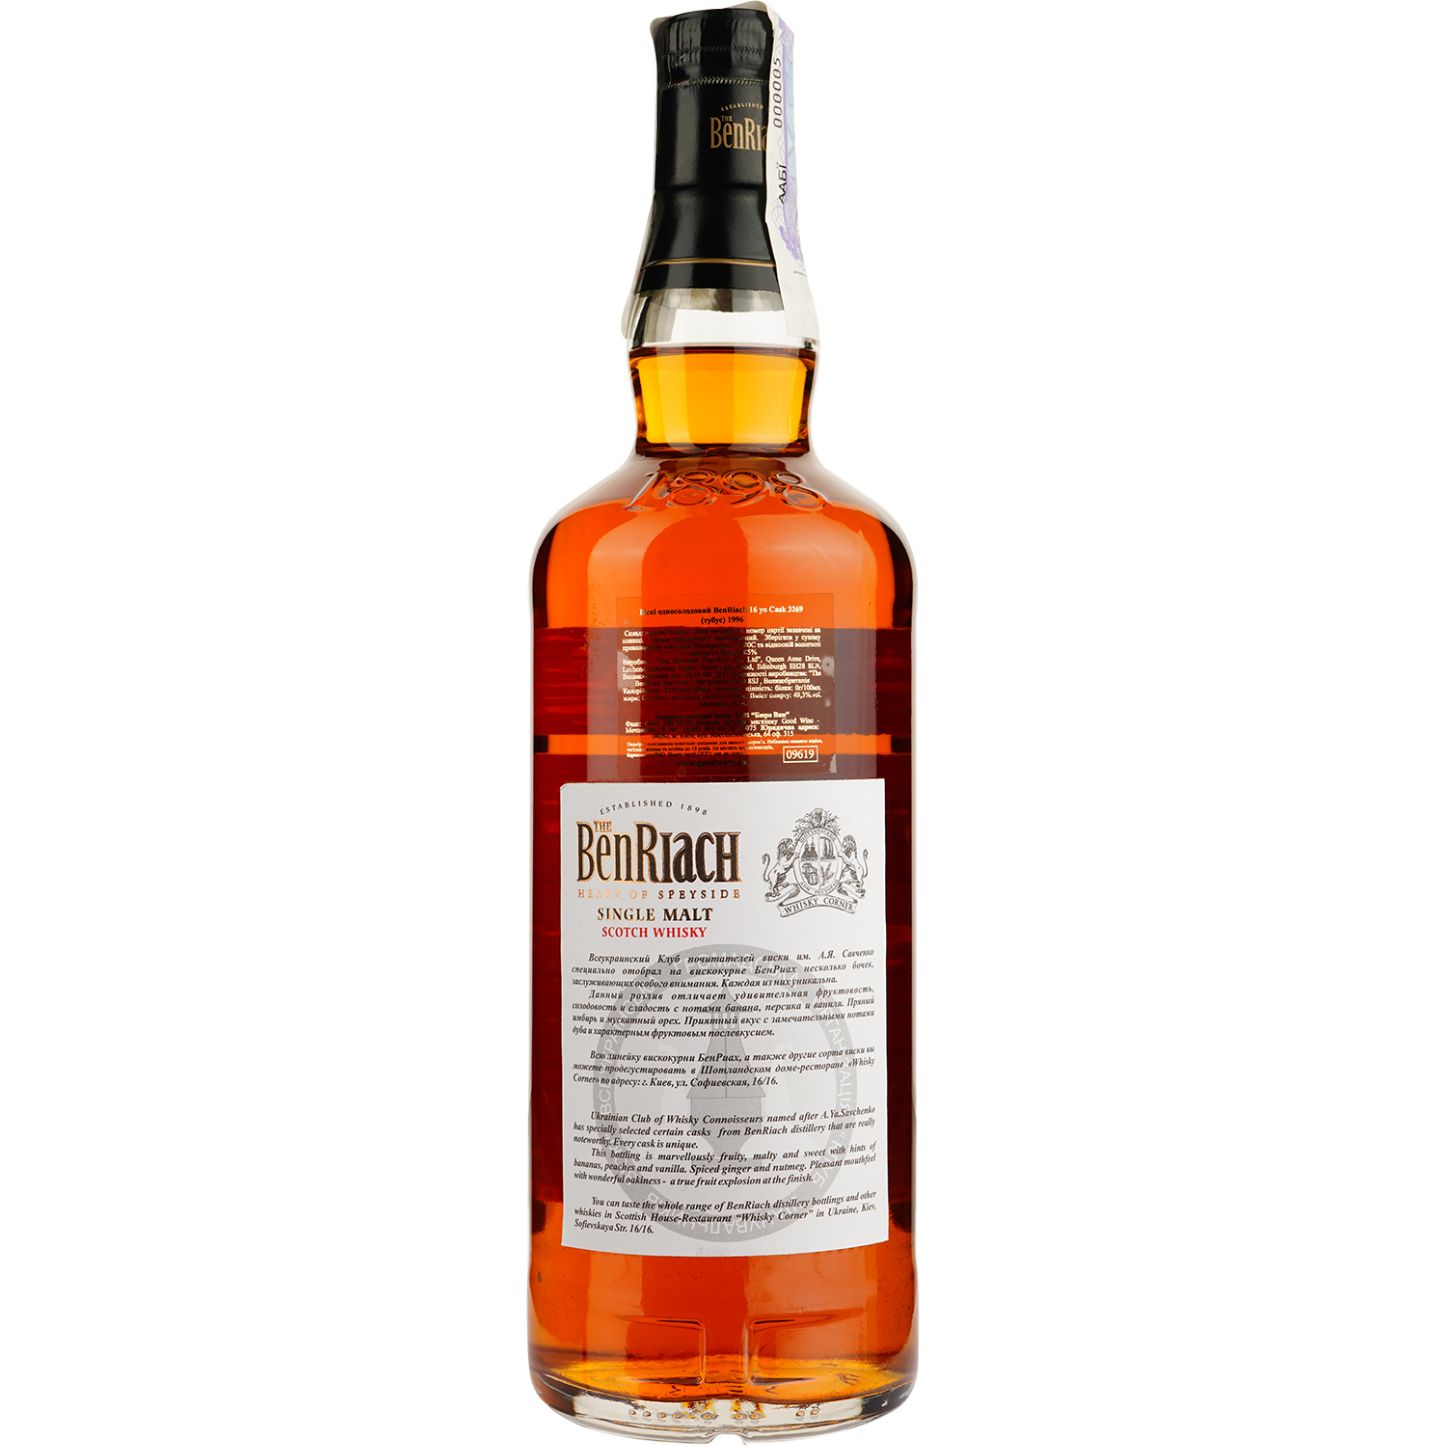 Виски BenRiach 16 Years Old Virgin Oak Hogshead Cask 3269 Single Malt Scotch Whisky, в подарочной упаковке, 49,3%, 0,7 л - фото 4